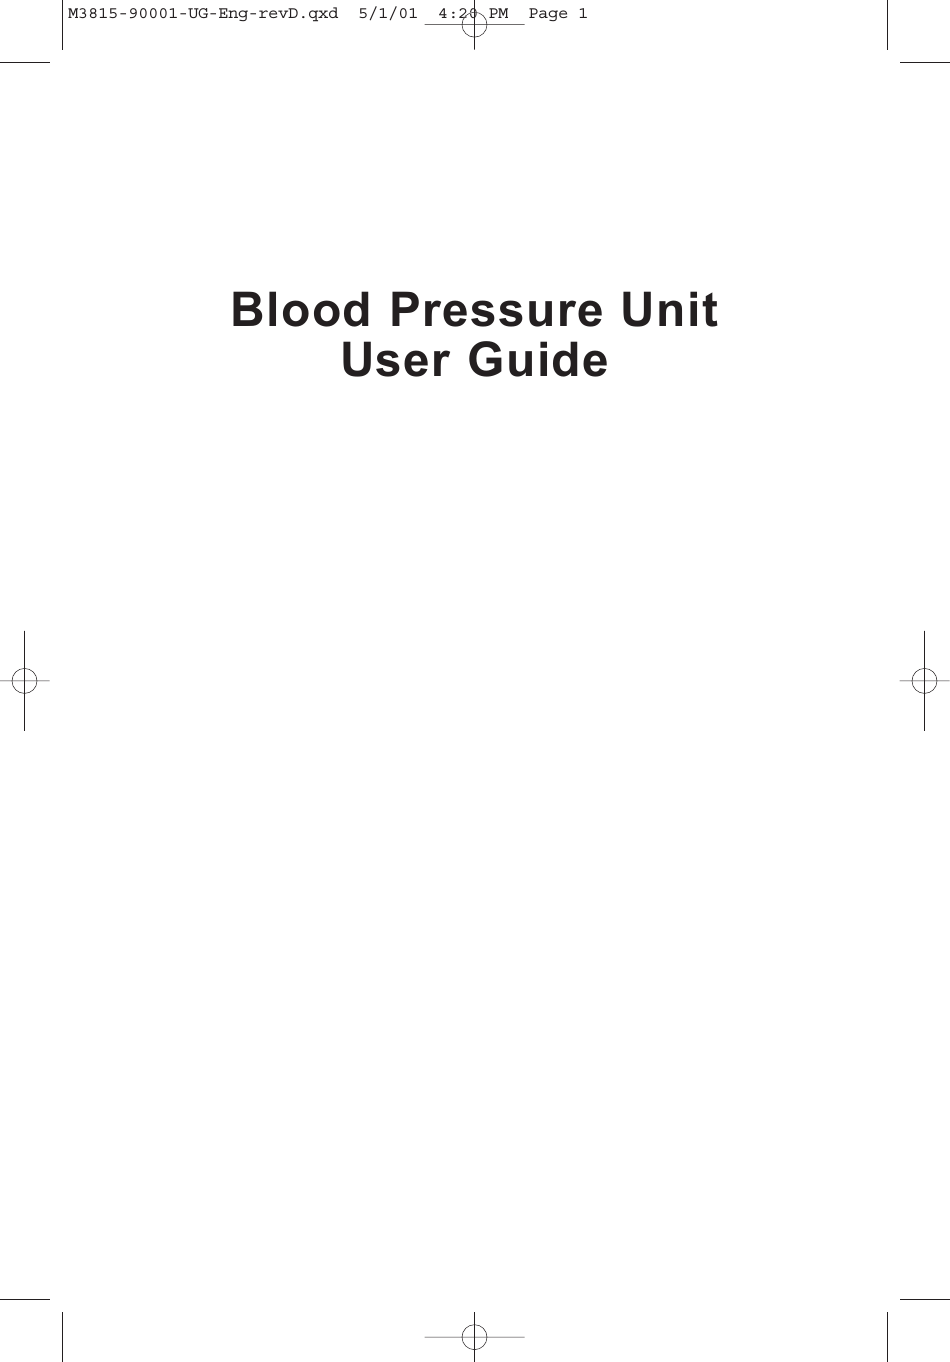 Blood Pressure Unit User GuideM3815-90001-UG-Eng-revD.qxd  5/1/01  4:20 PM  Page 1